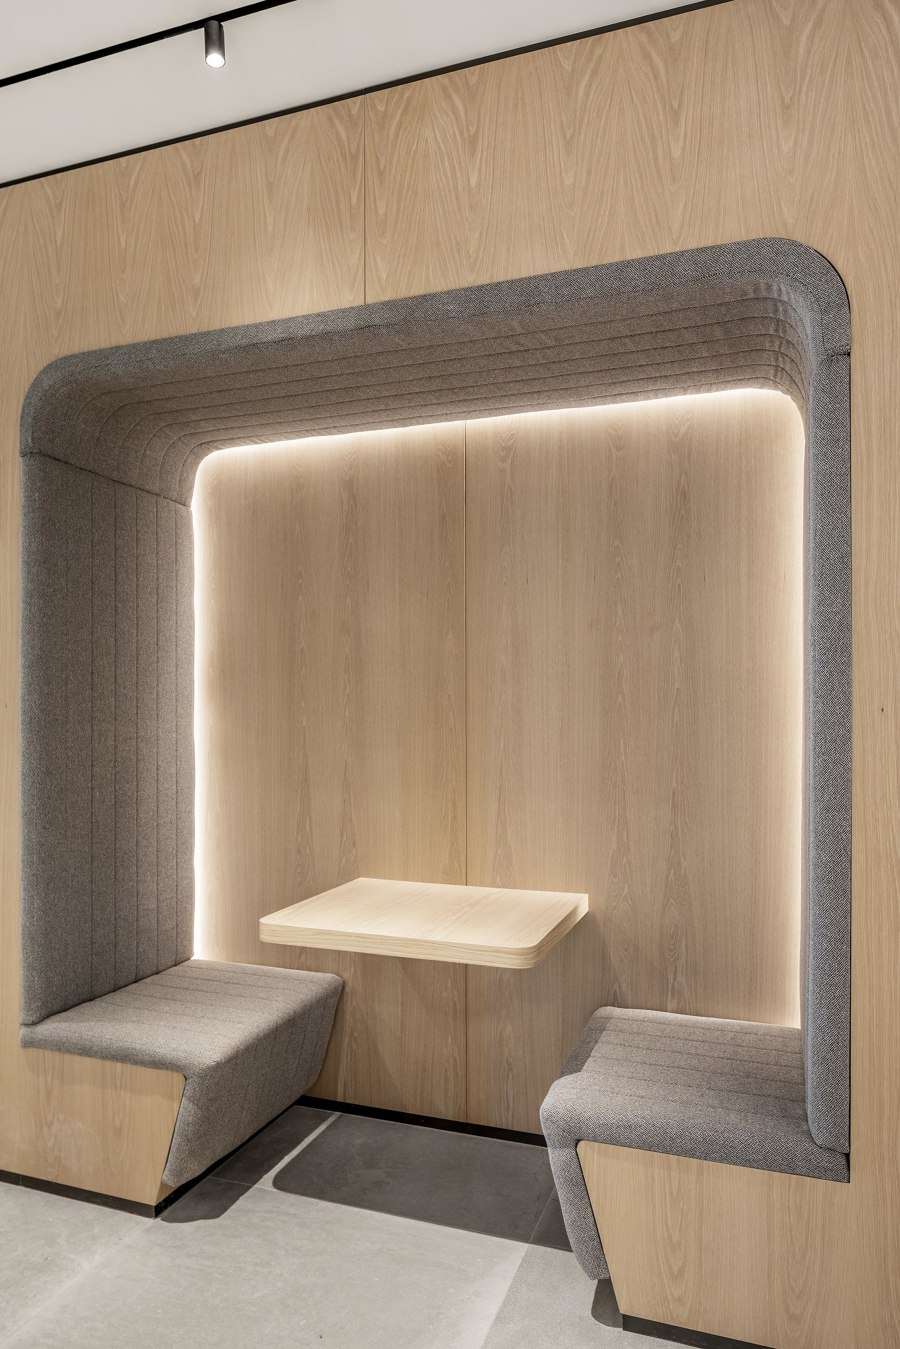 S. Friedman by Shirli Zamir Design Studio | Office facilities